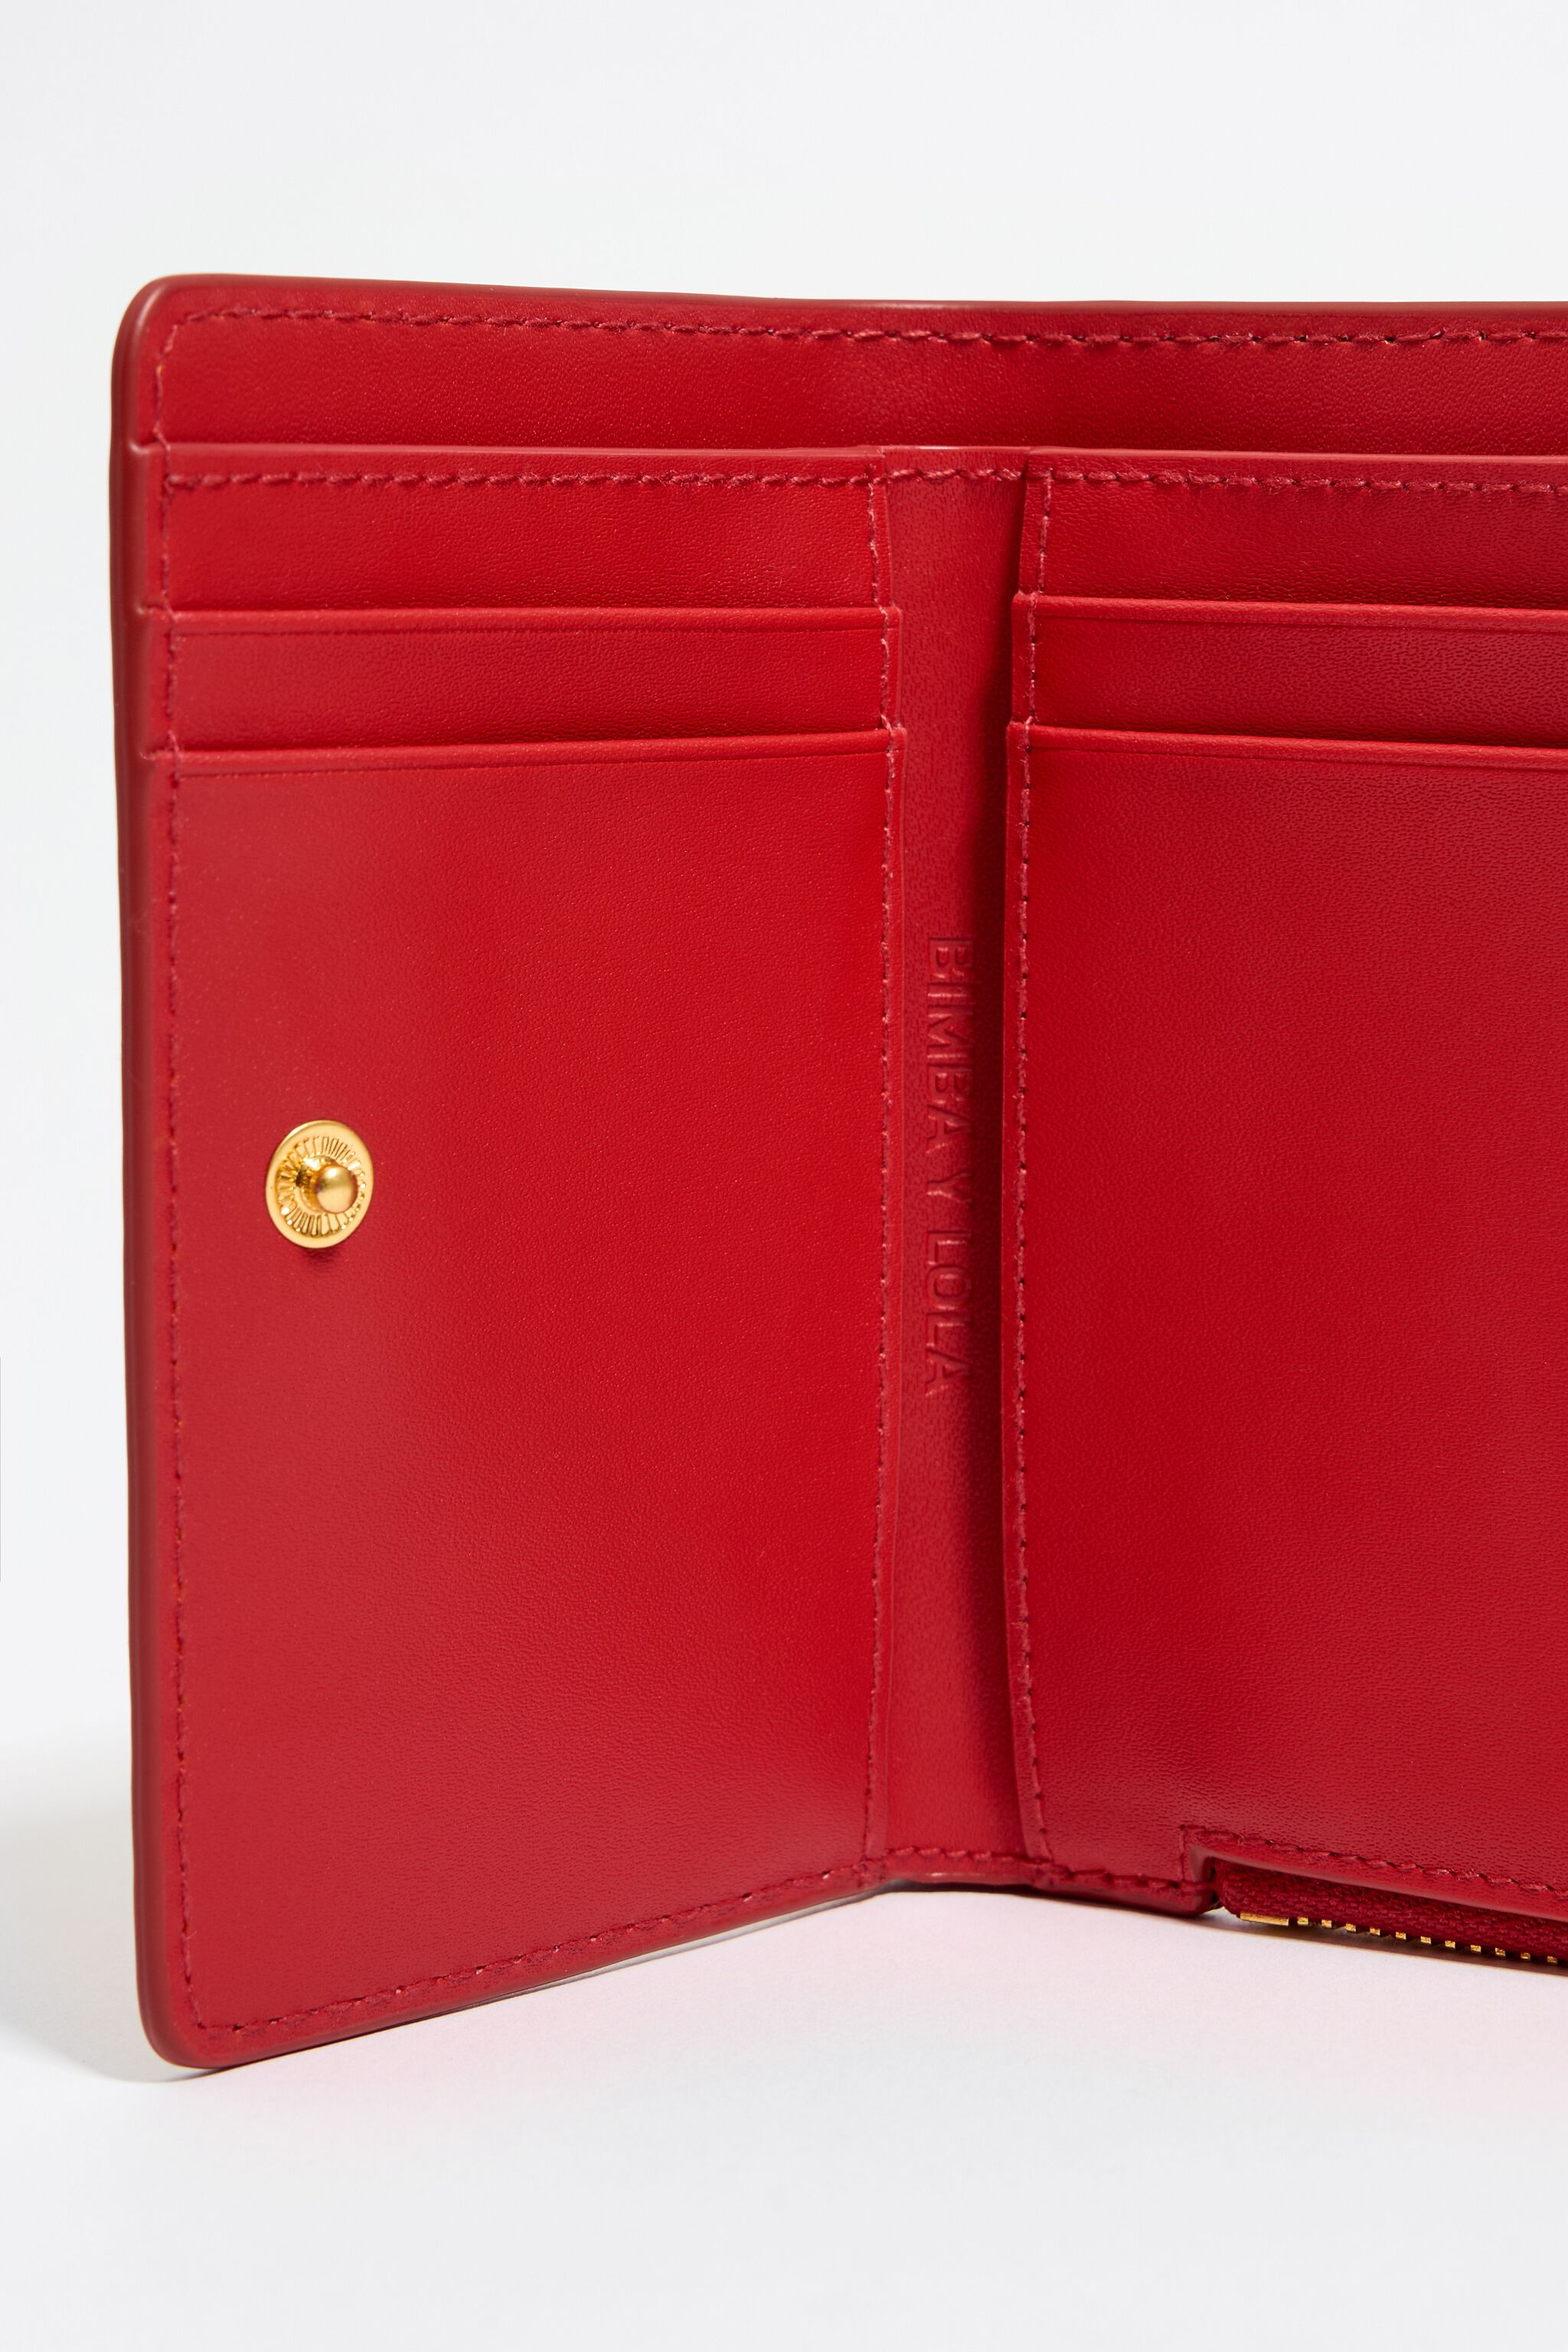 Gucci Small GG Marmont Matelassé Shoulder Bag - Farfetch